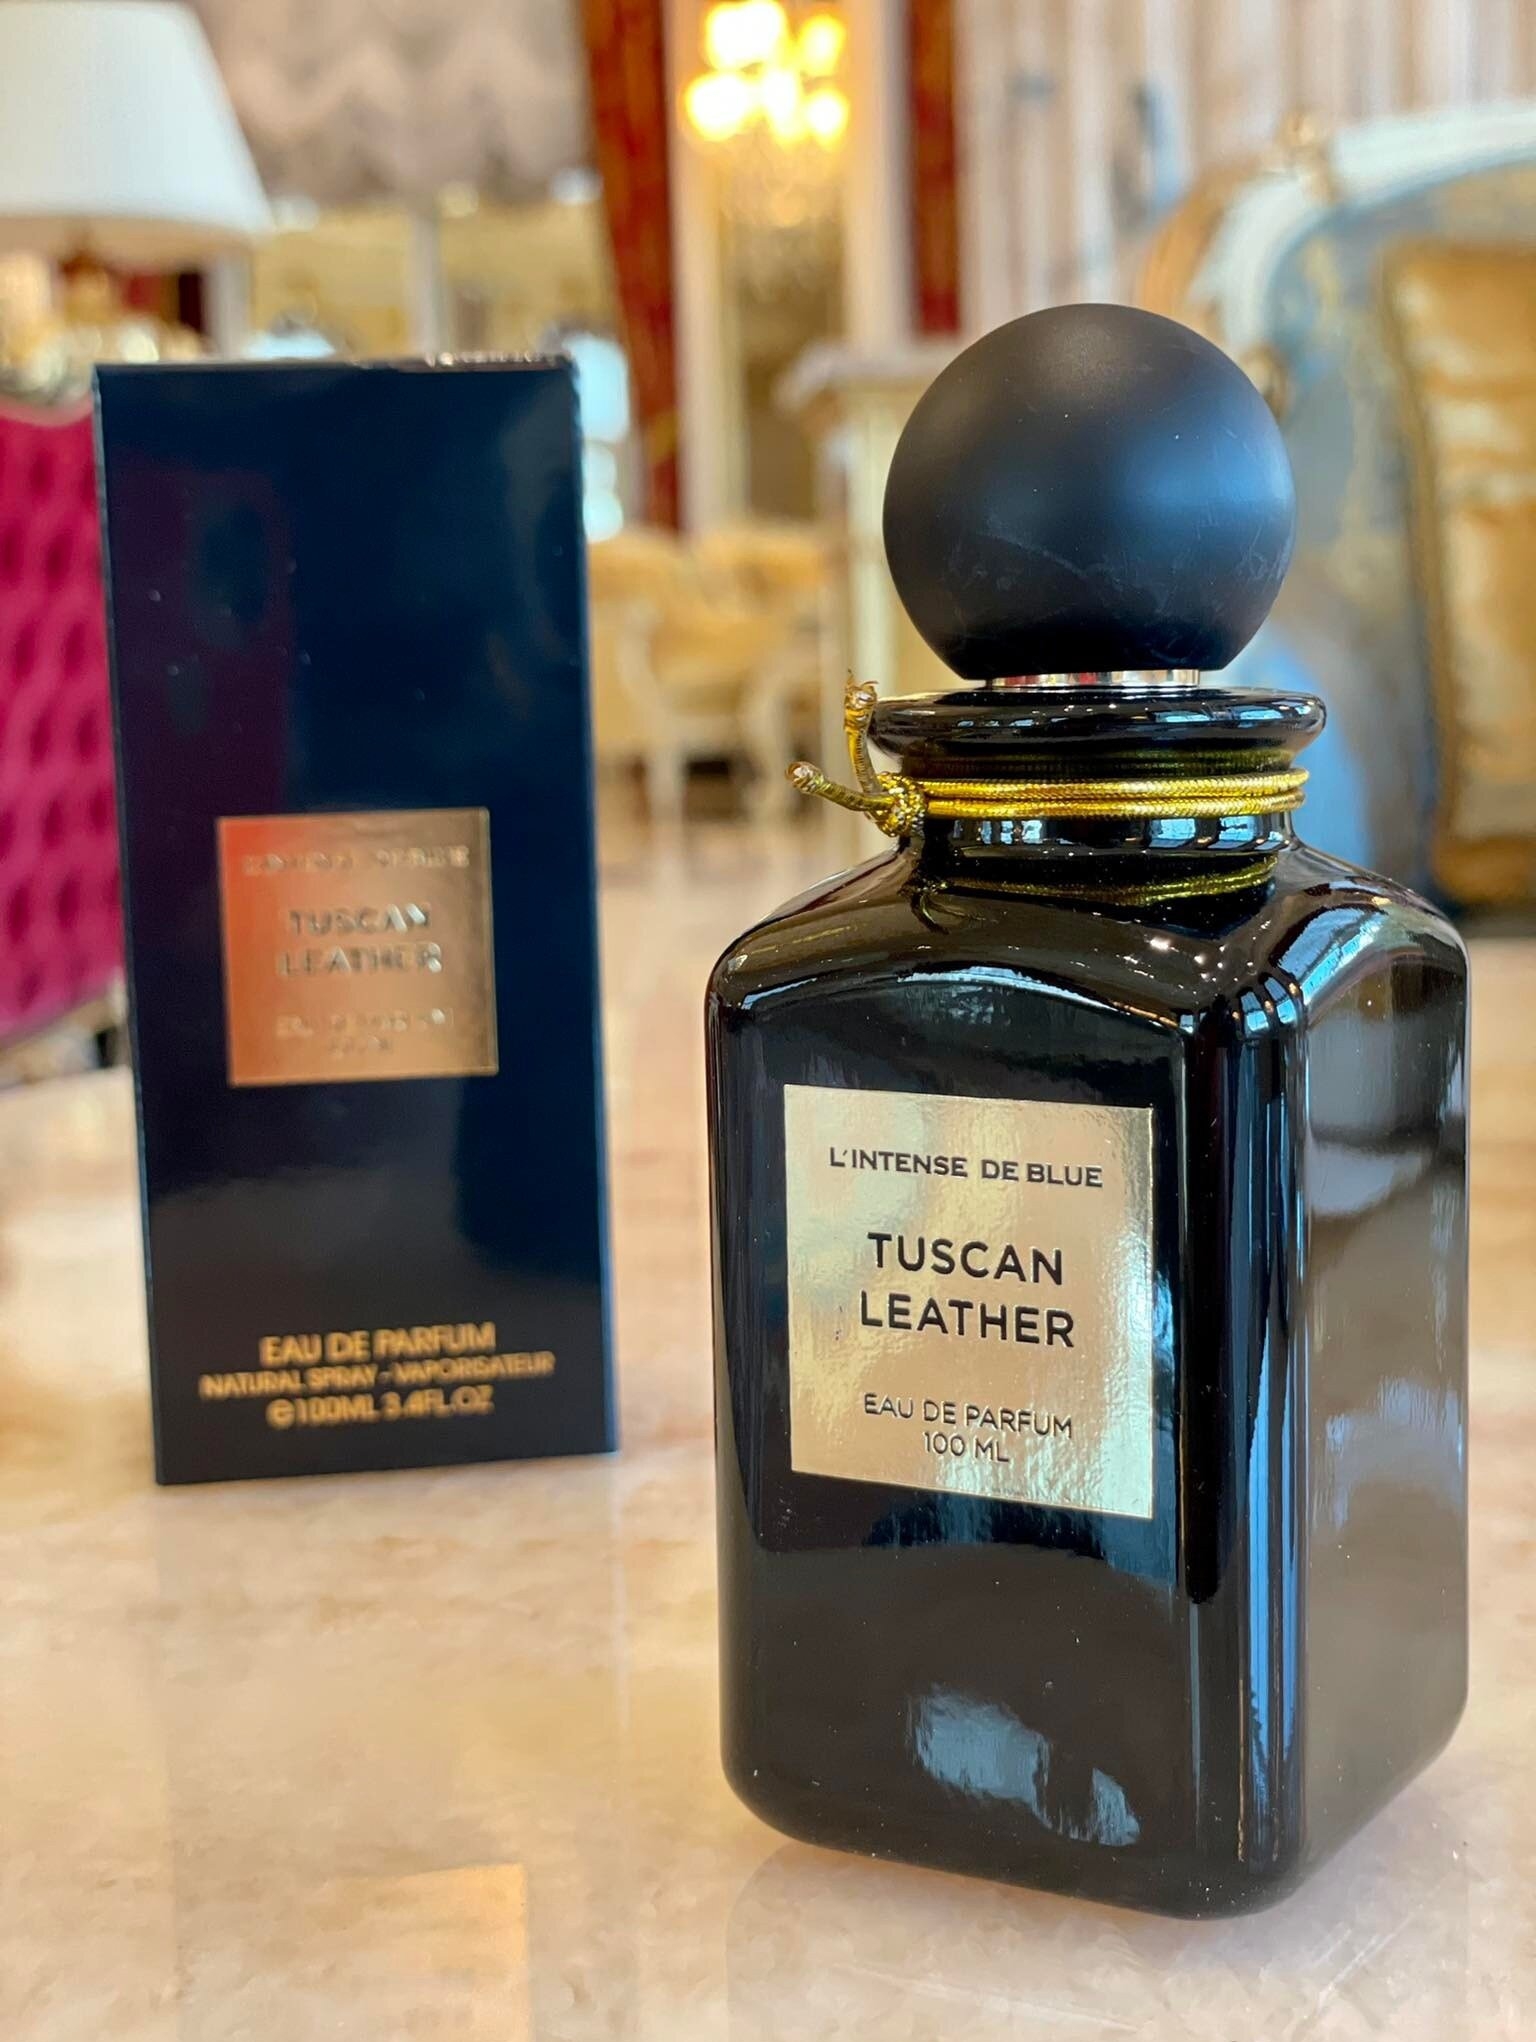 Tuscany Leather ▷ (TOM FORD Tuscan Leather) ▷ Arabic perfume 🥇 80ml